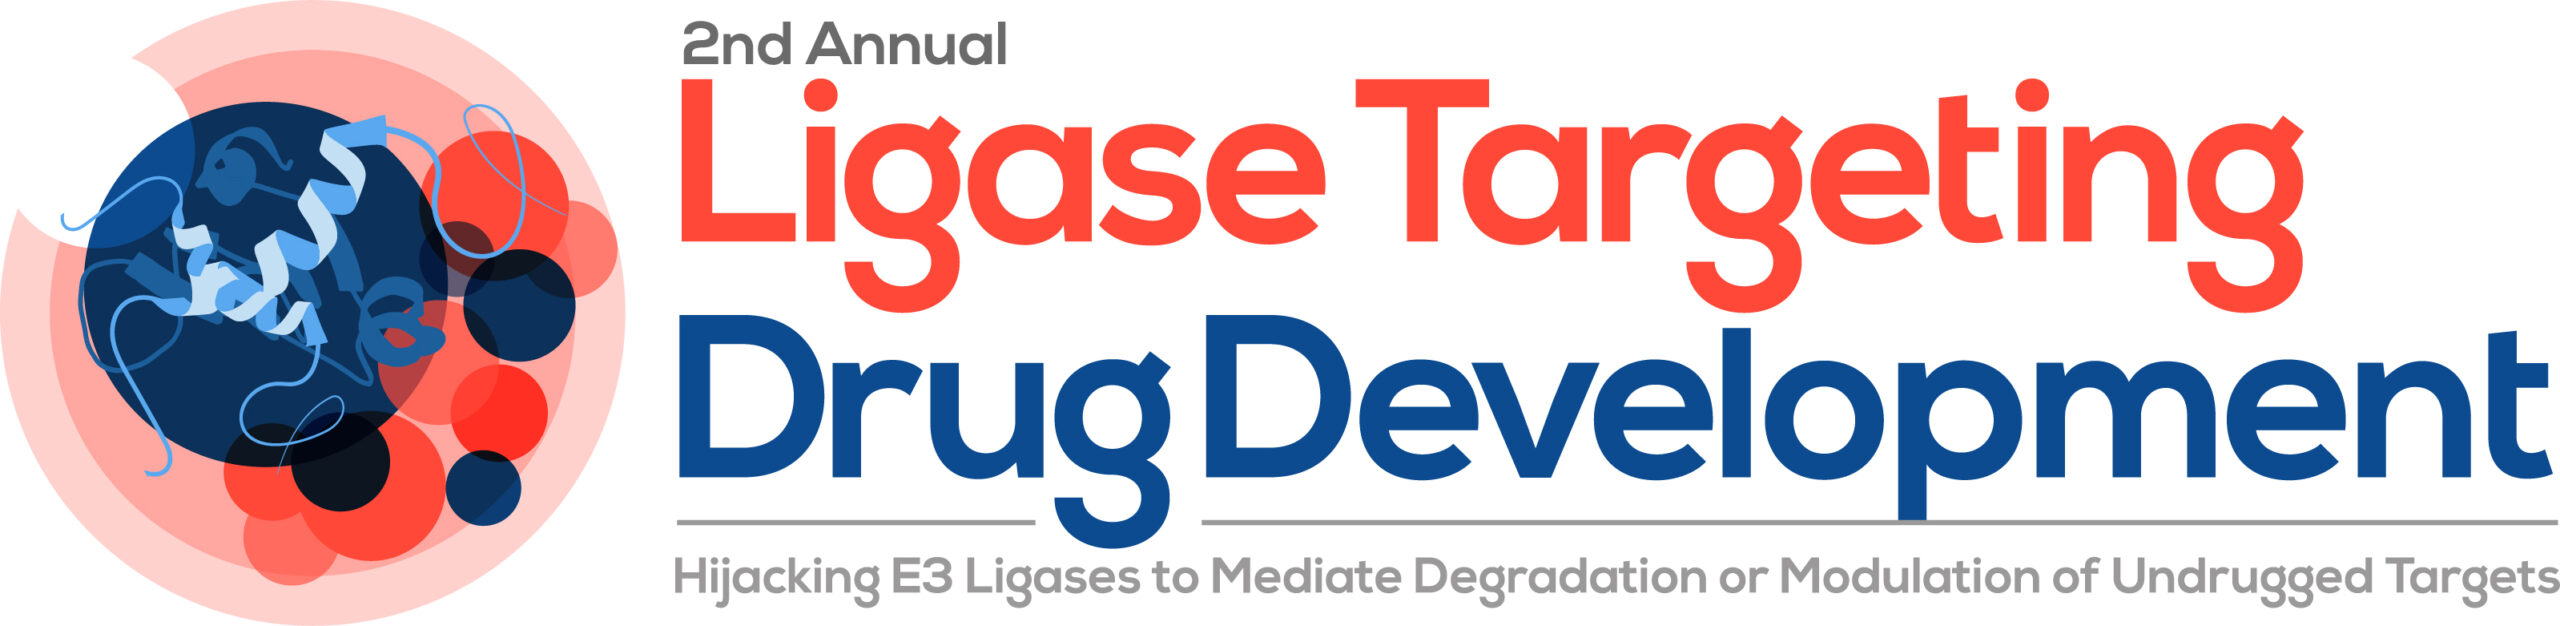 25642- 2nd Ligase Targeting Drug Development Summit logo